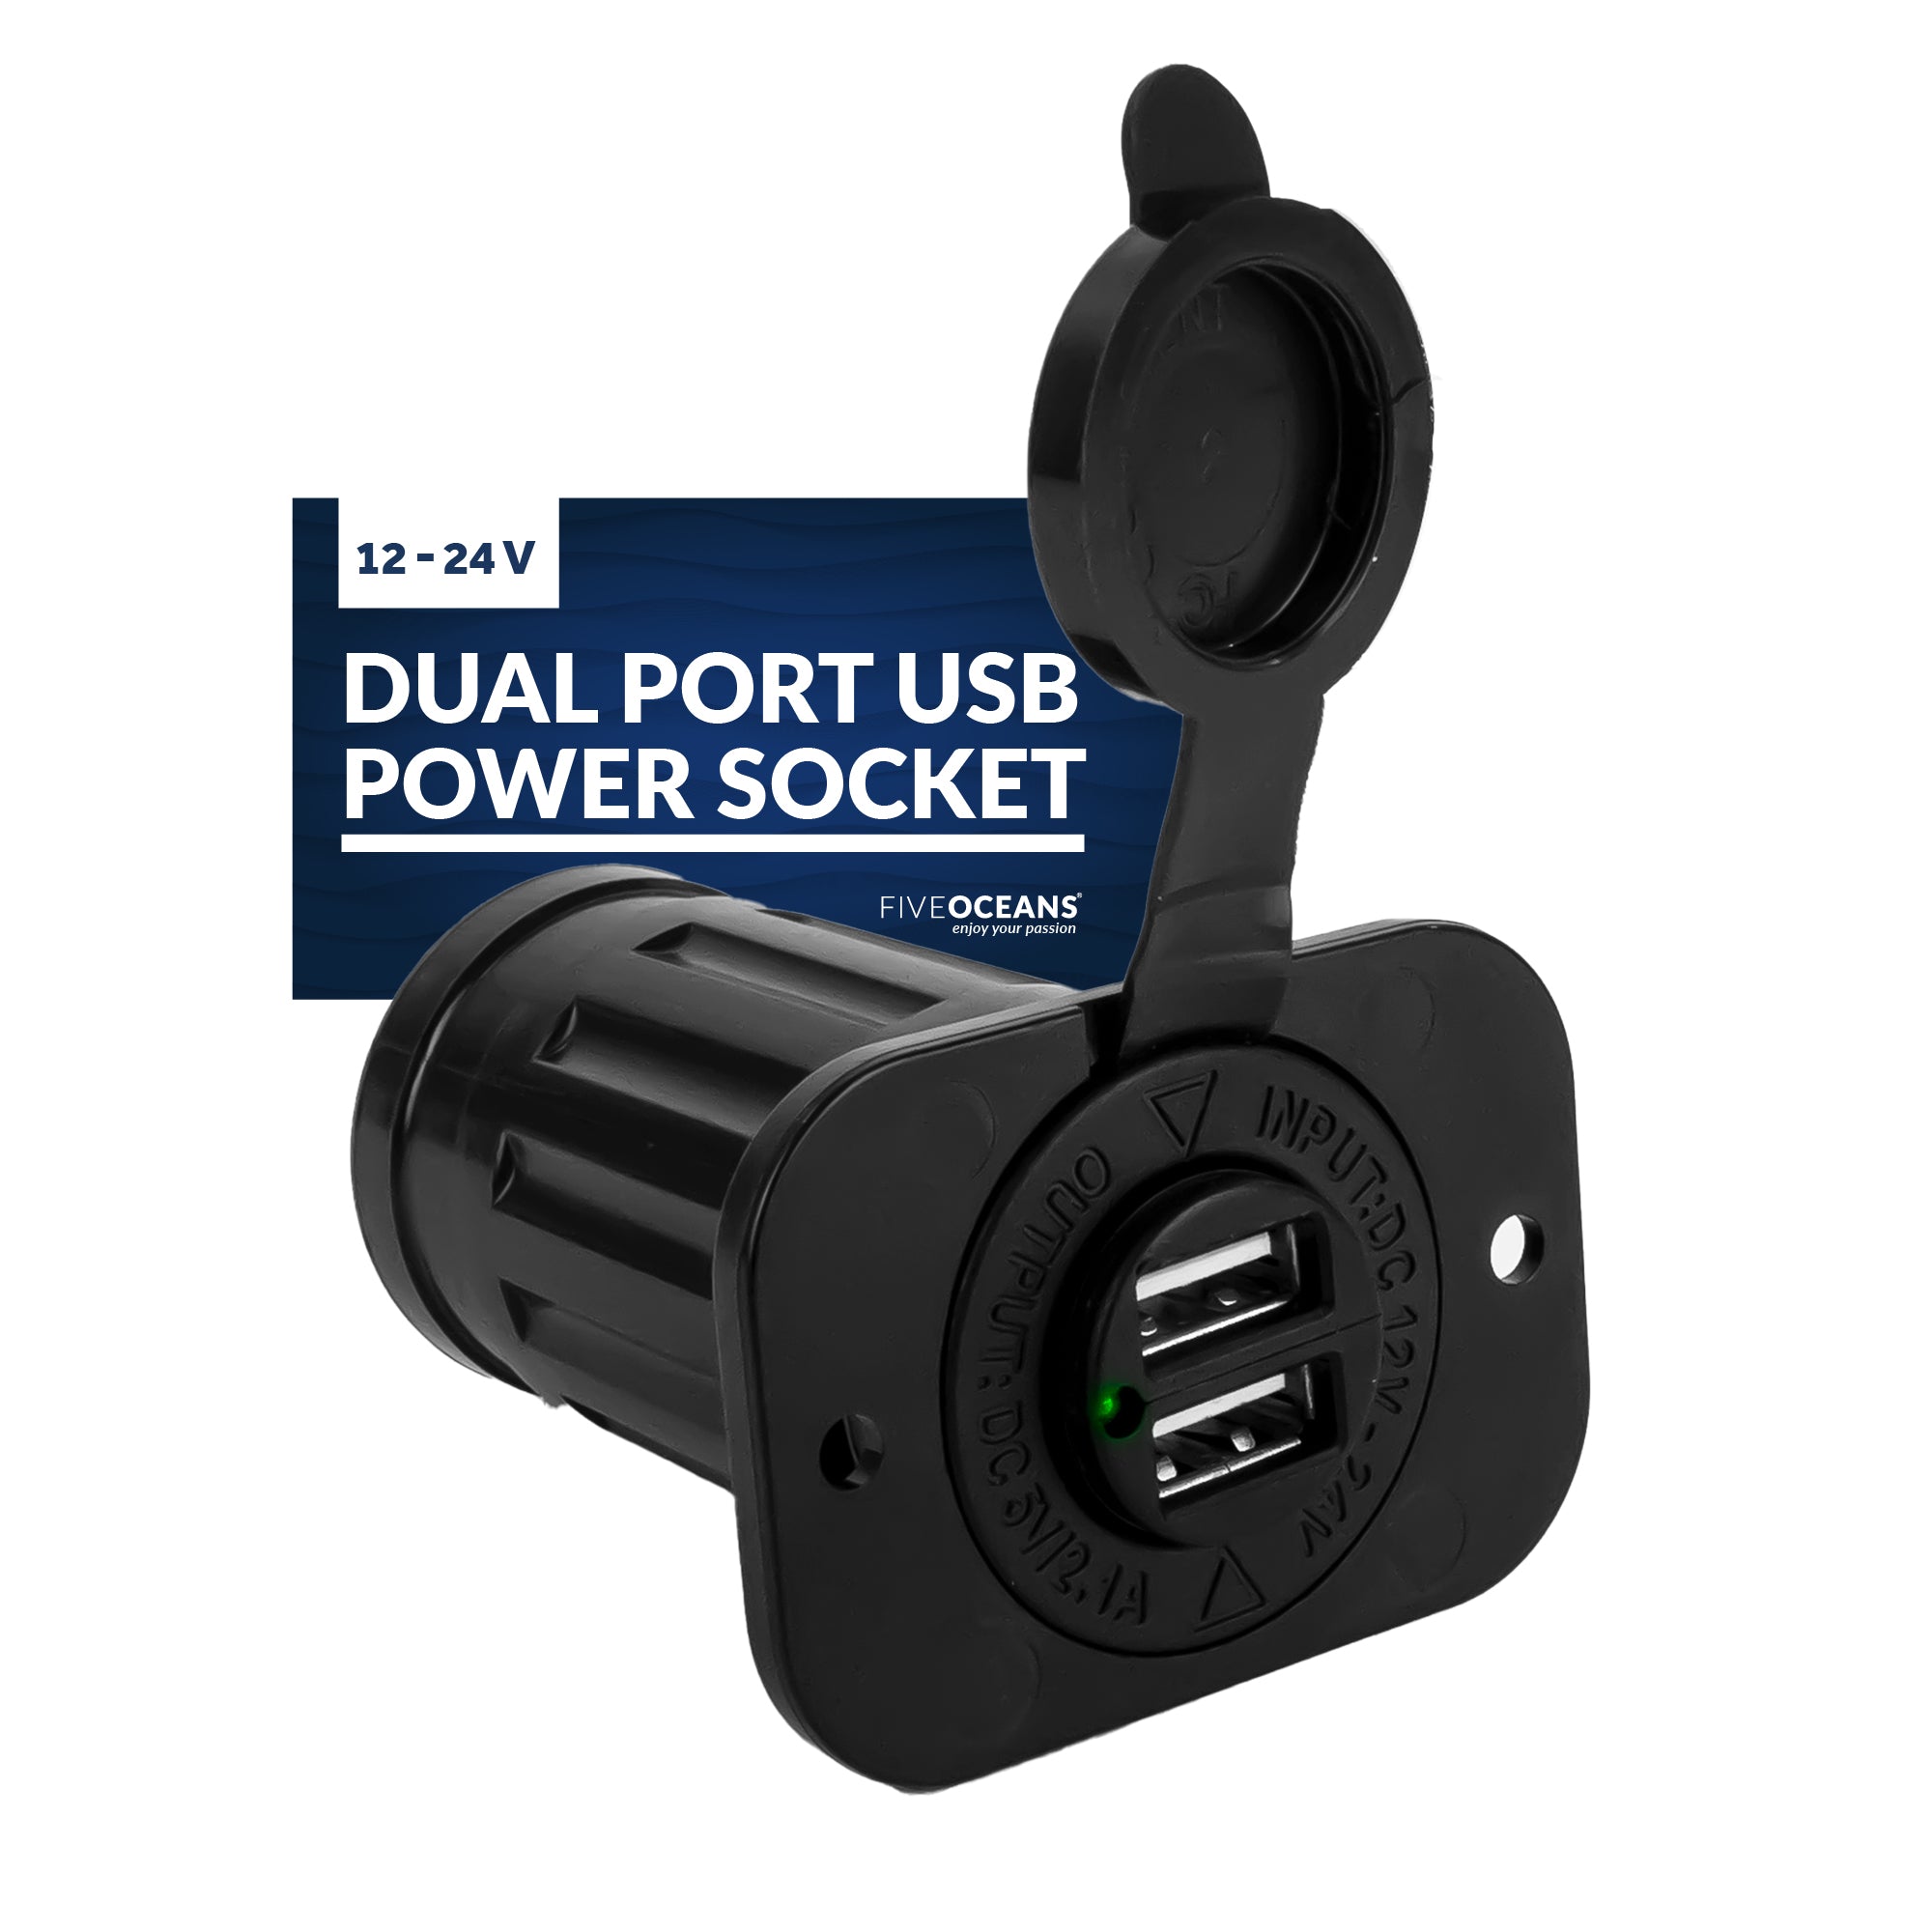 Dual Port USB Power Socket, 12 - 24 V - FO3656